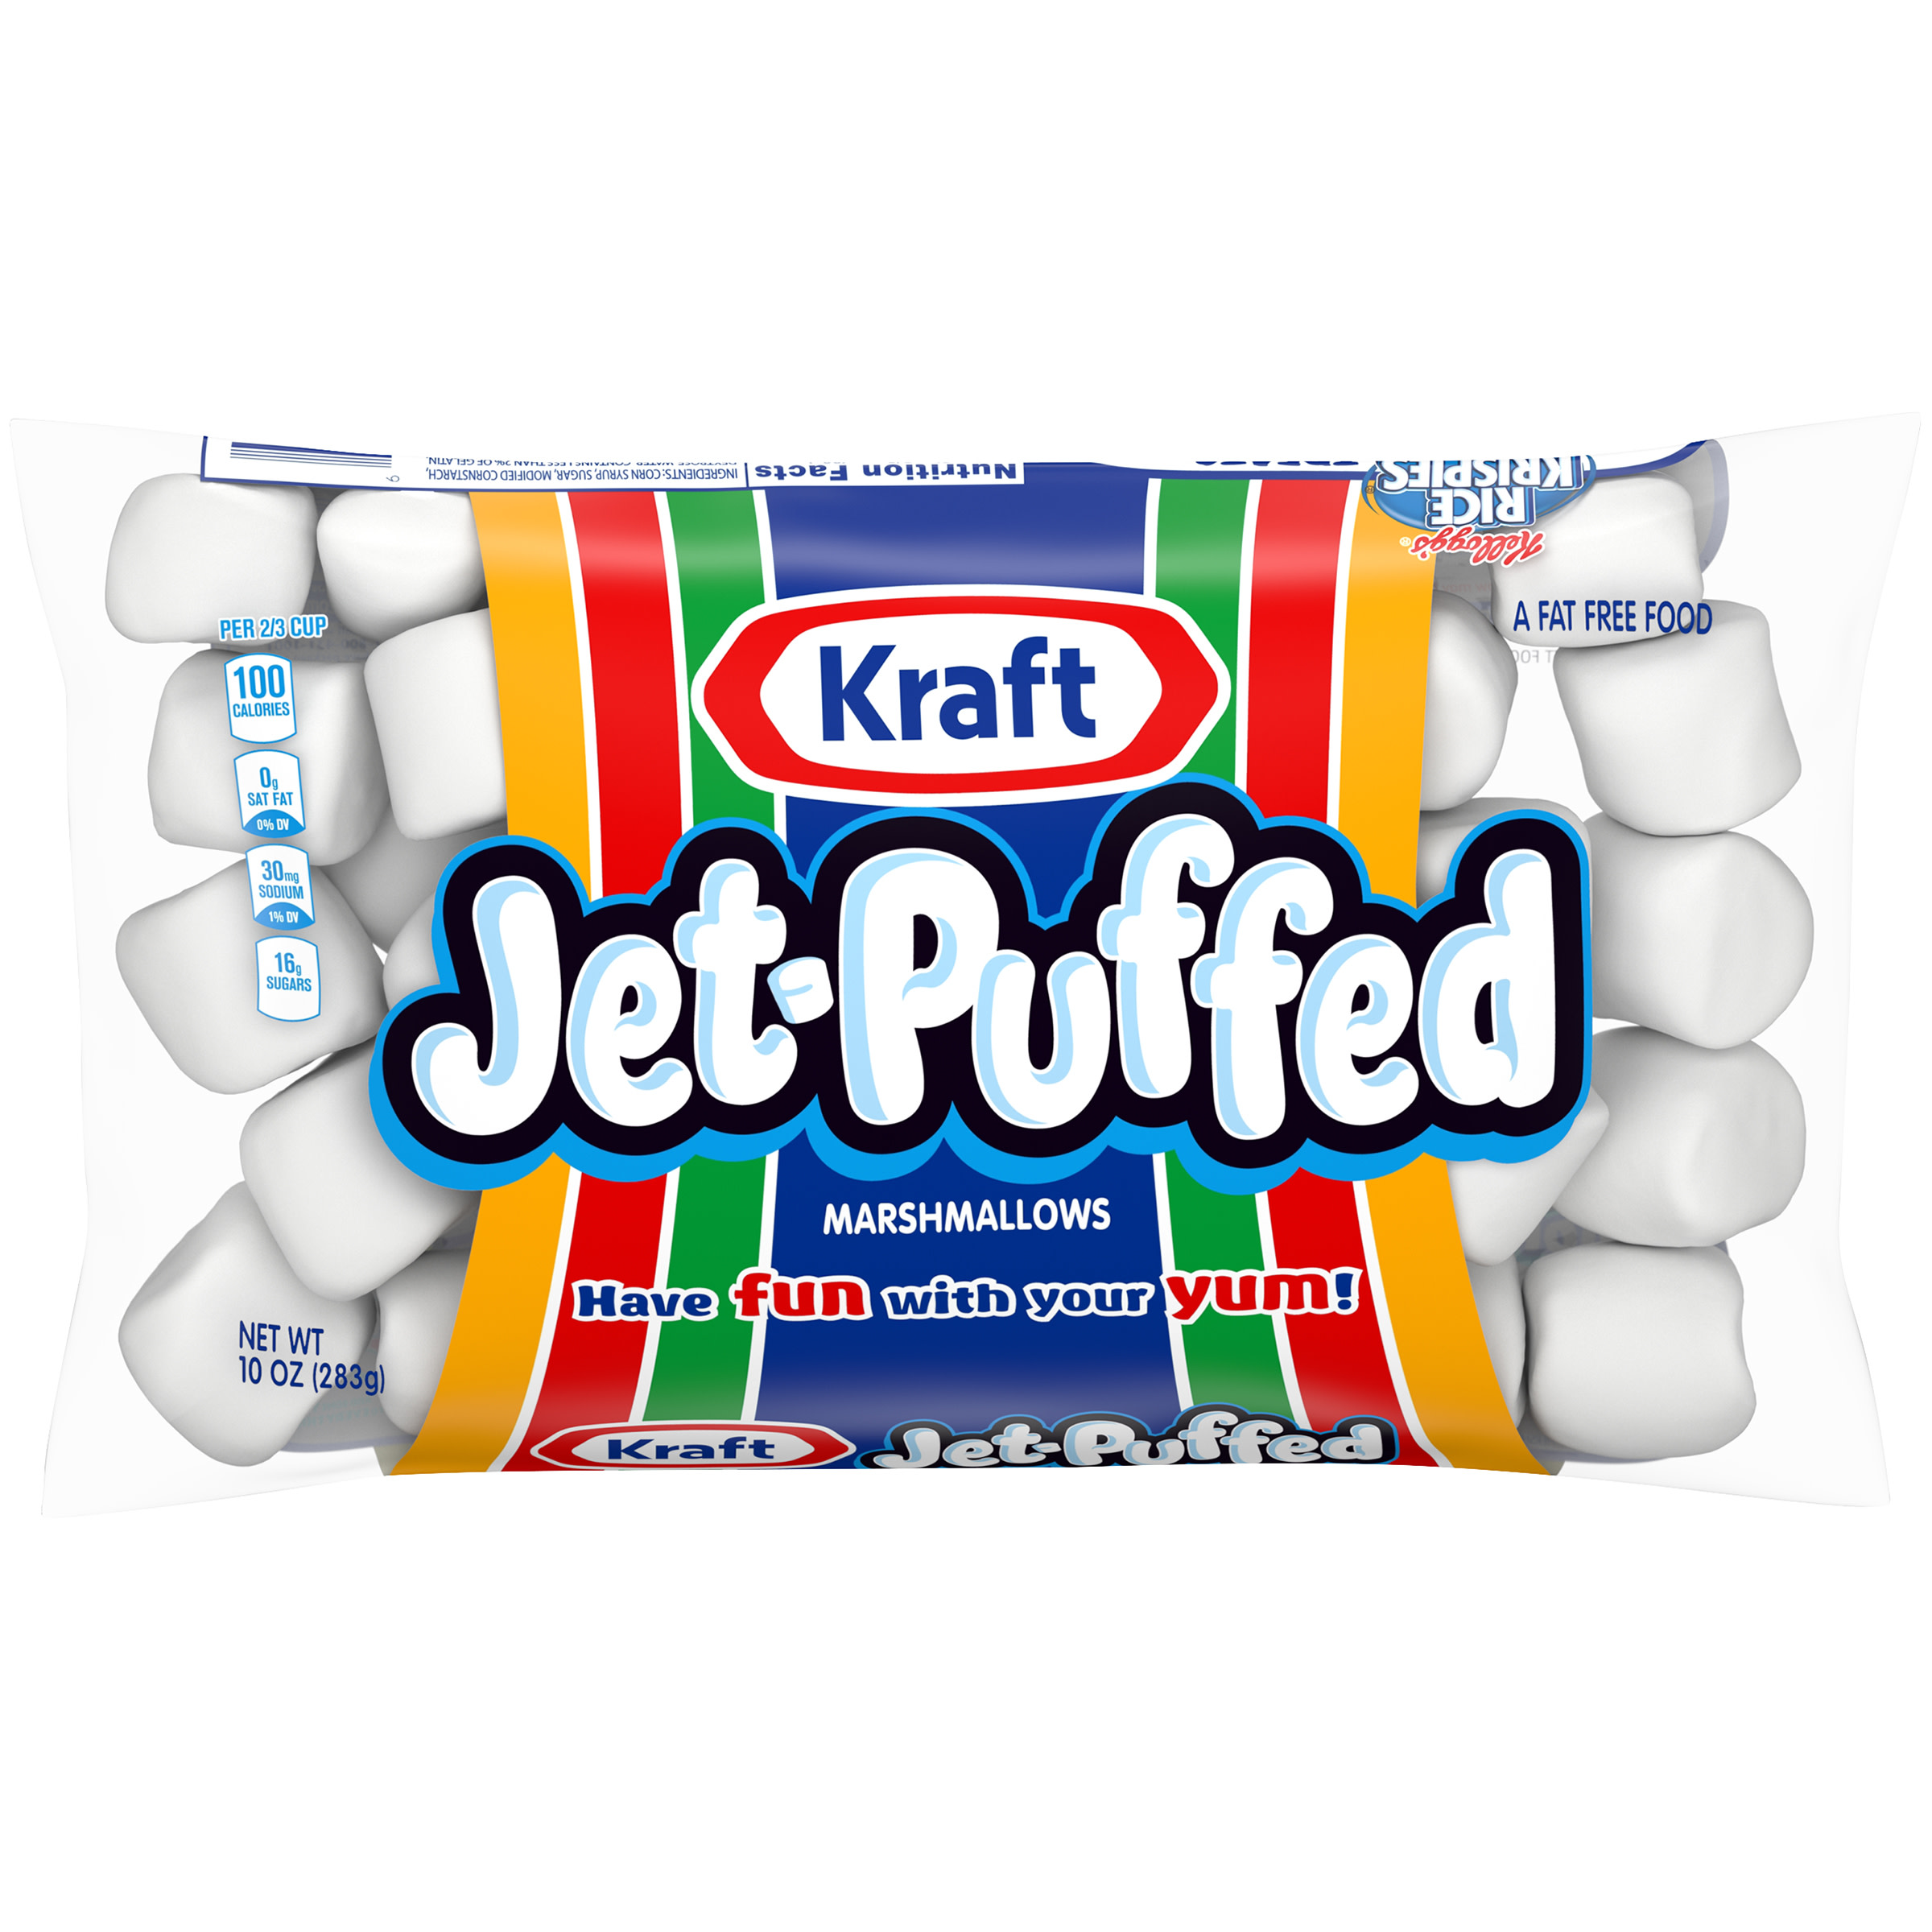 Jet-Puffed Marshmallows, 10 oz Bag - image 1 of 11